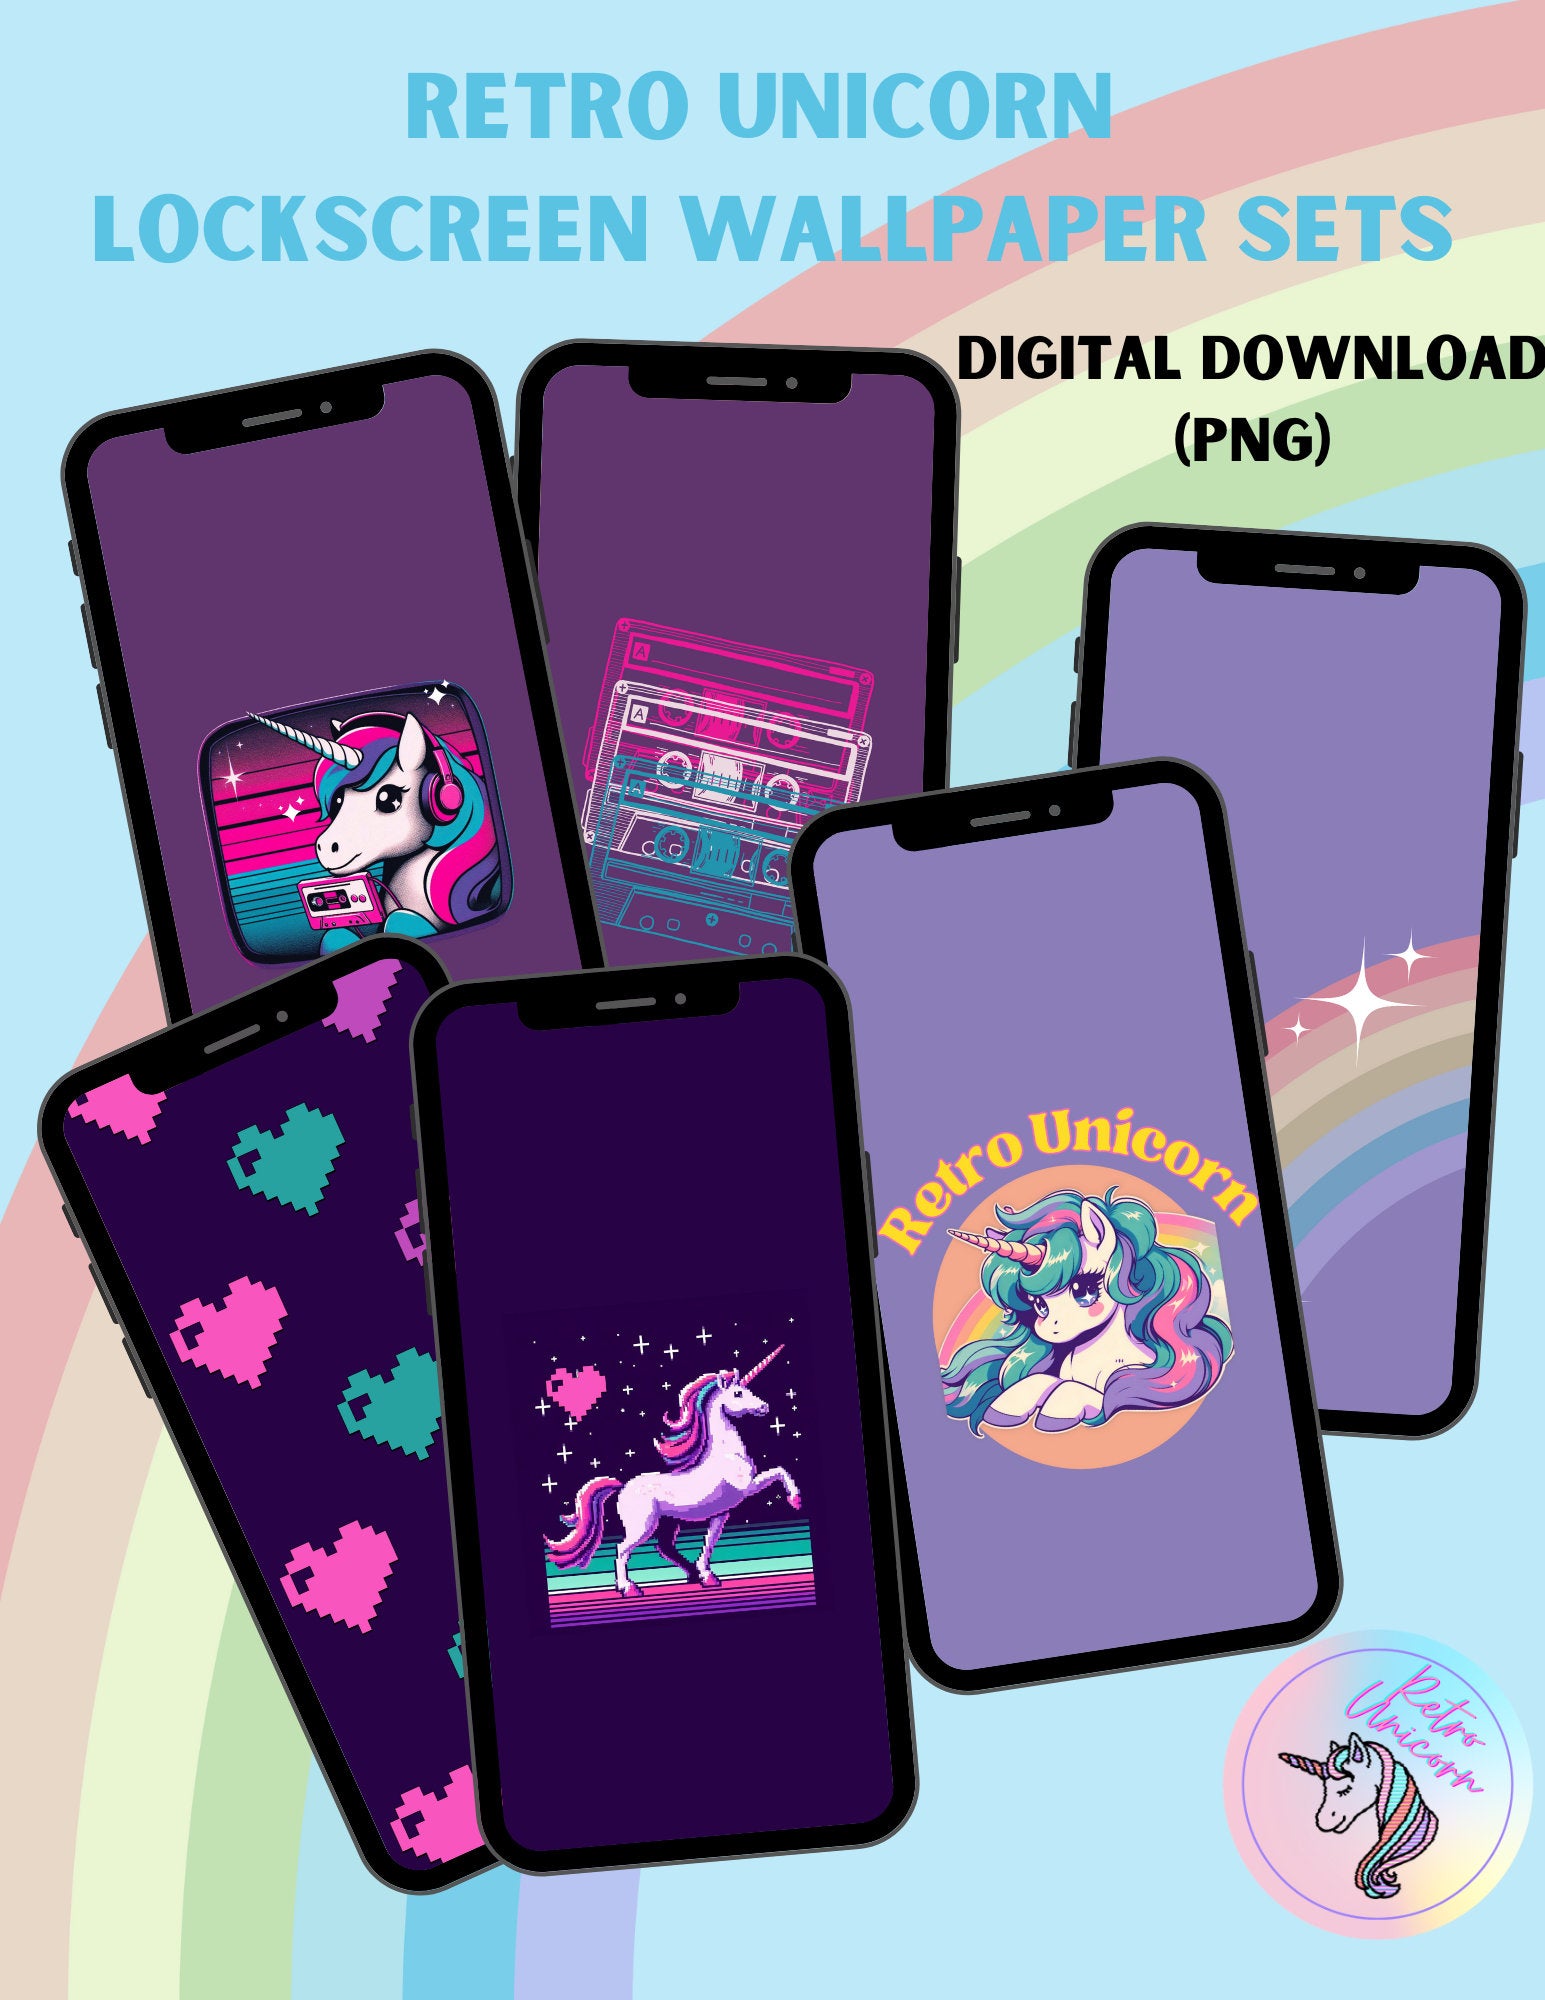 Unicorn Lockscreen Wallpaper bundle, 80s PNG 90s PNG, 90s graphic, 90s nostalgia, Video Game, Anime, 90s cartoons, 80s aesthetic